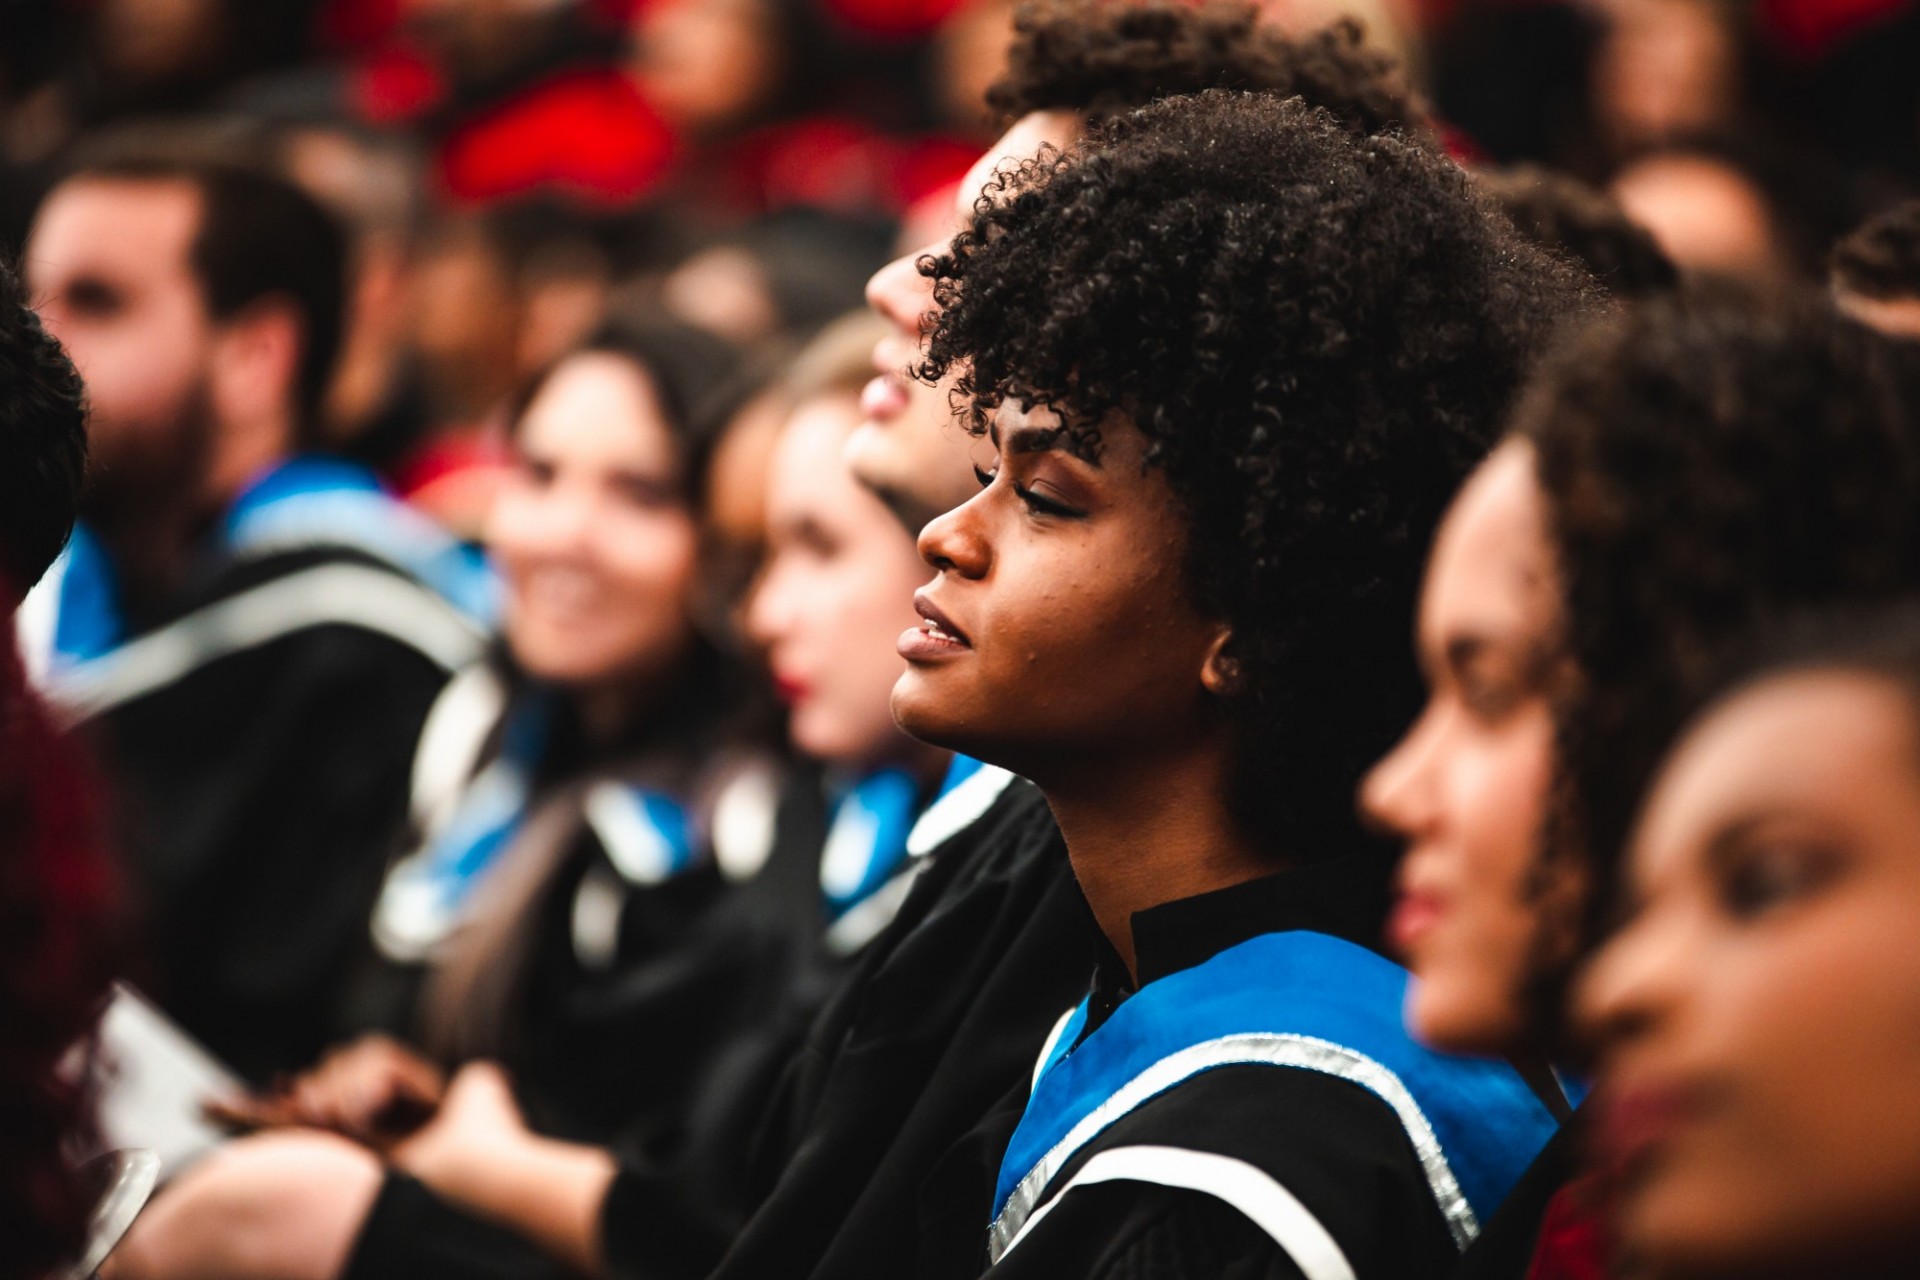 College aged black female wearing graduation robes alongside her graduating peers